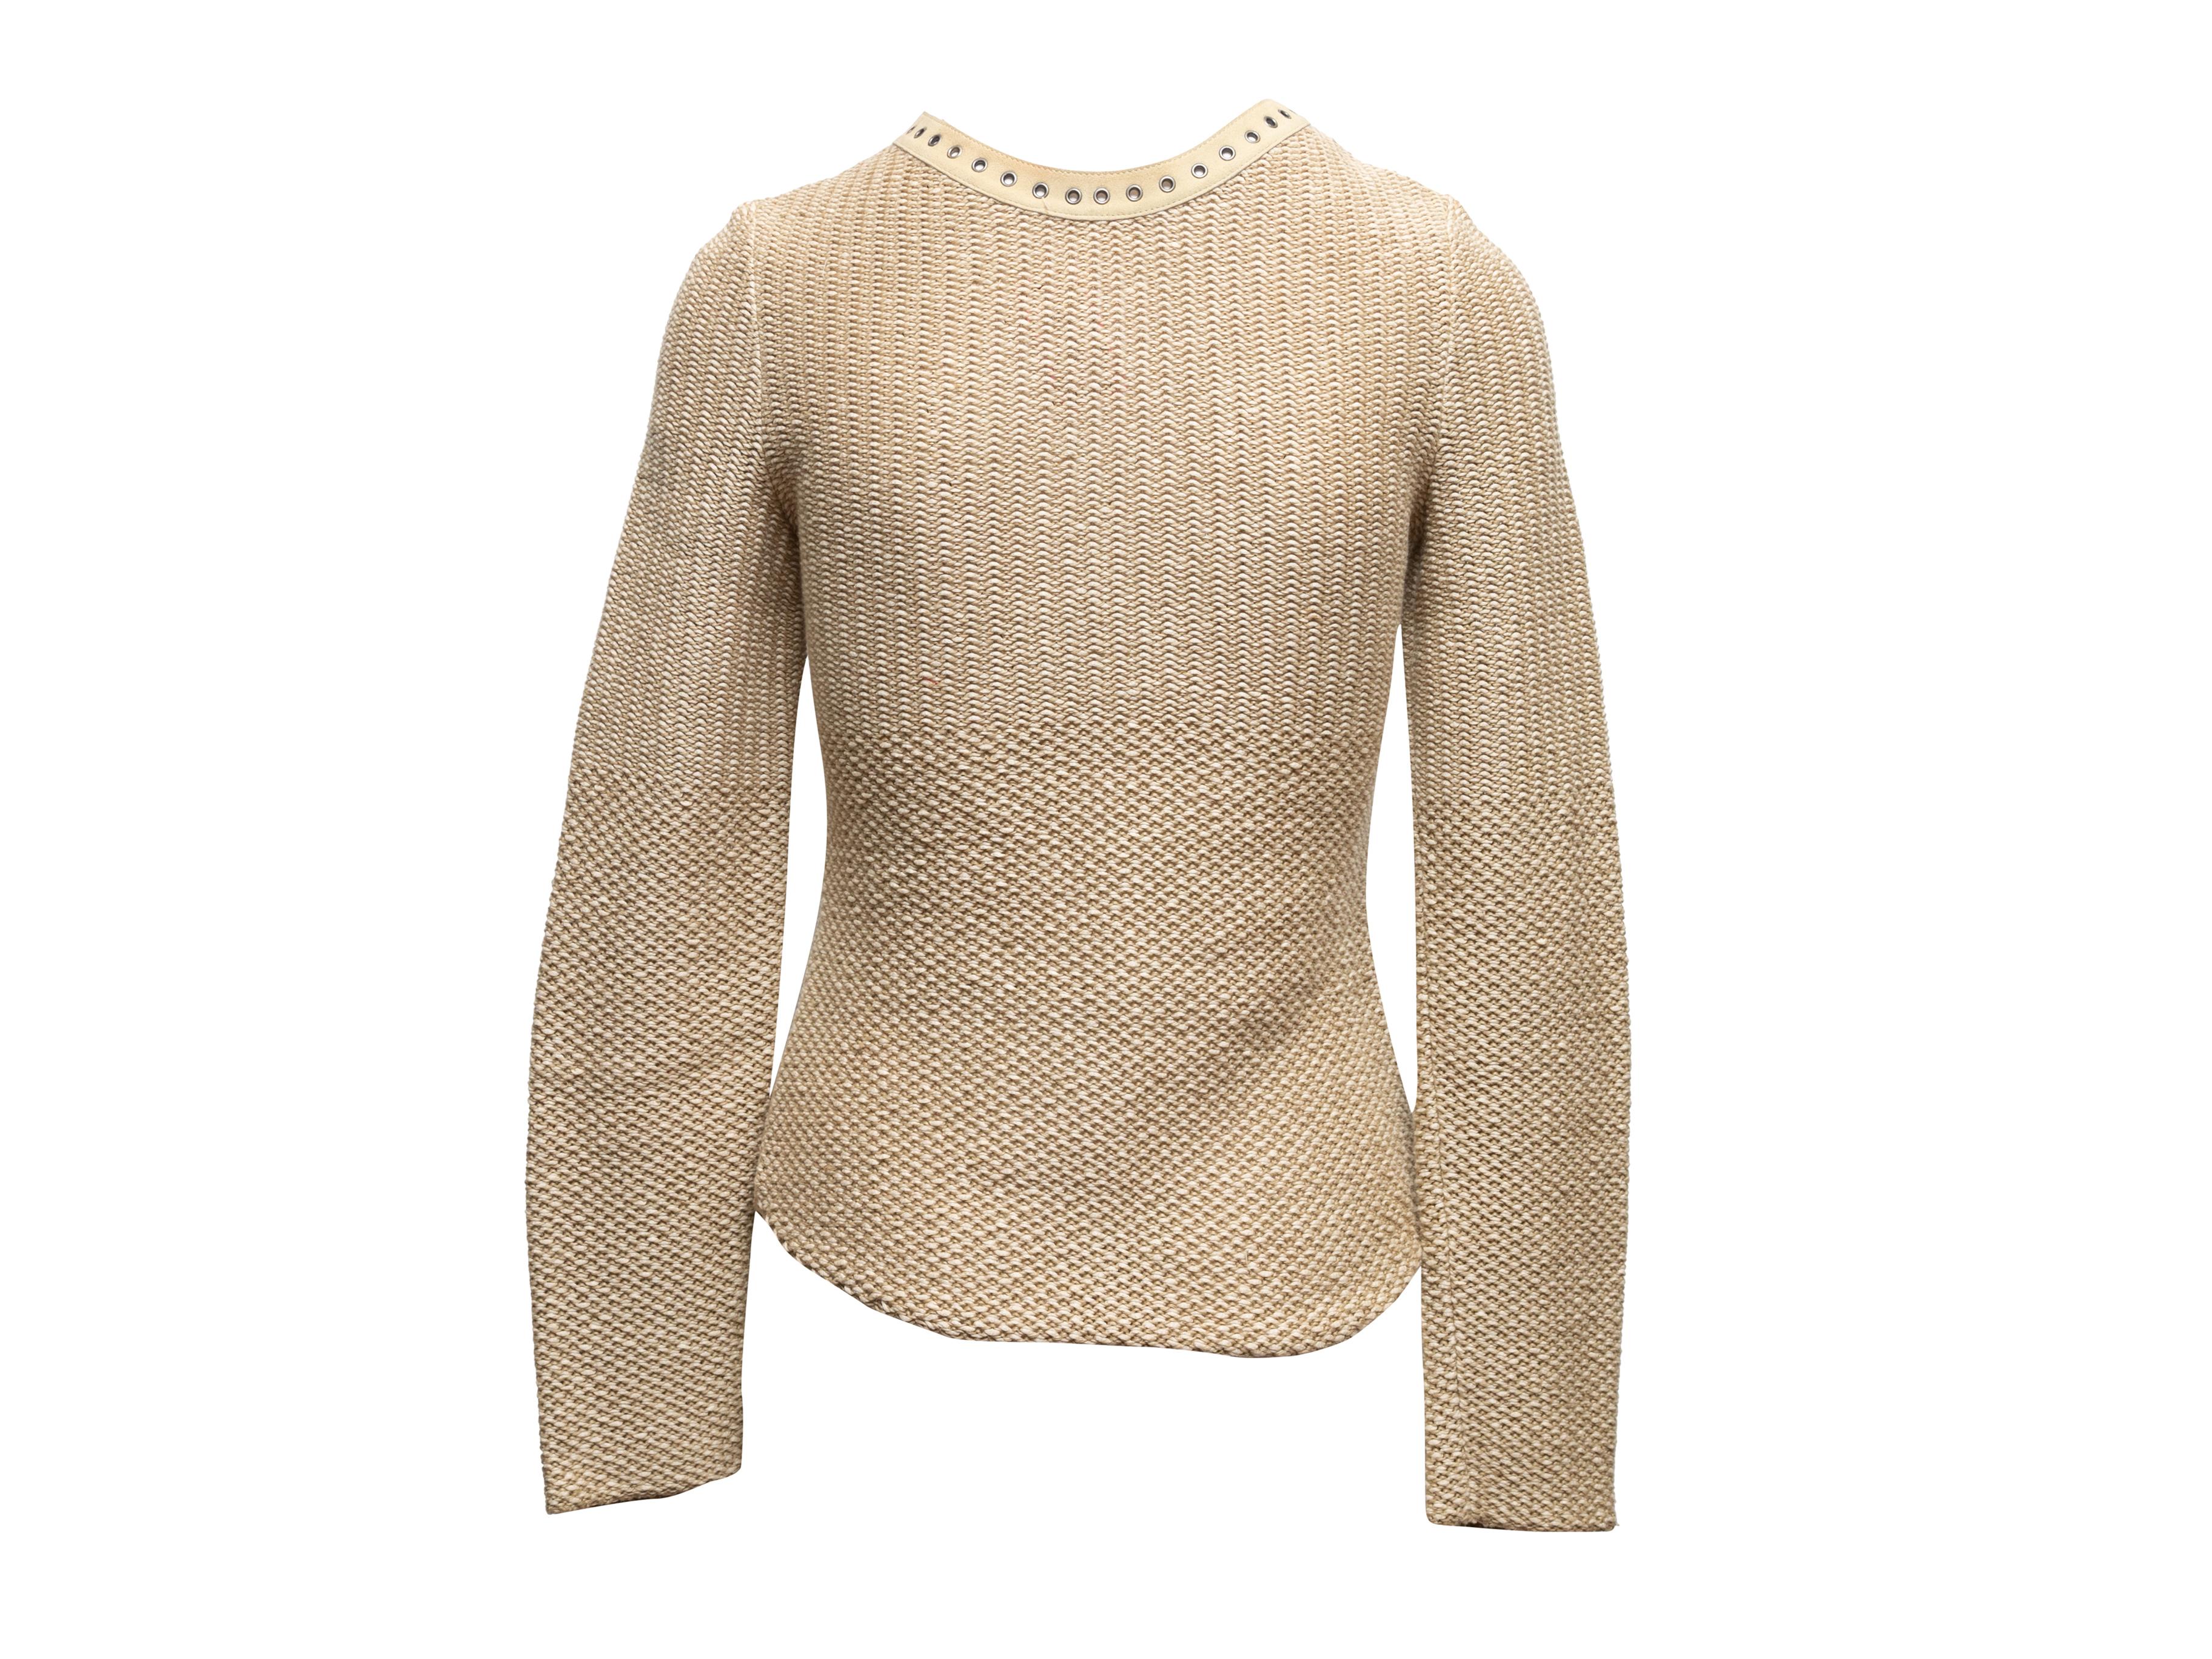 Women's Vintage Beige Salvatore Ferragamo Leather-Trimmed Sweater Size US S